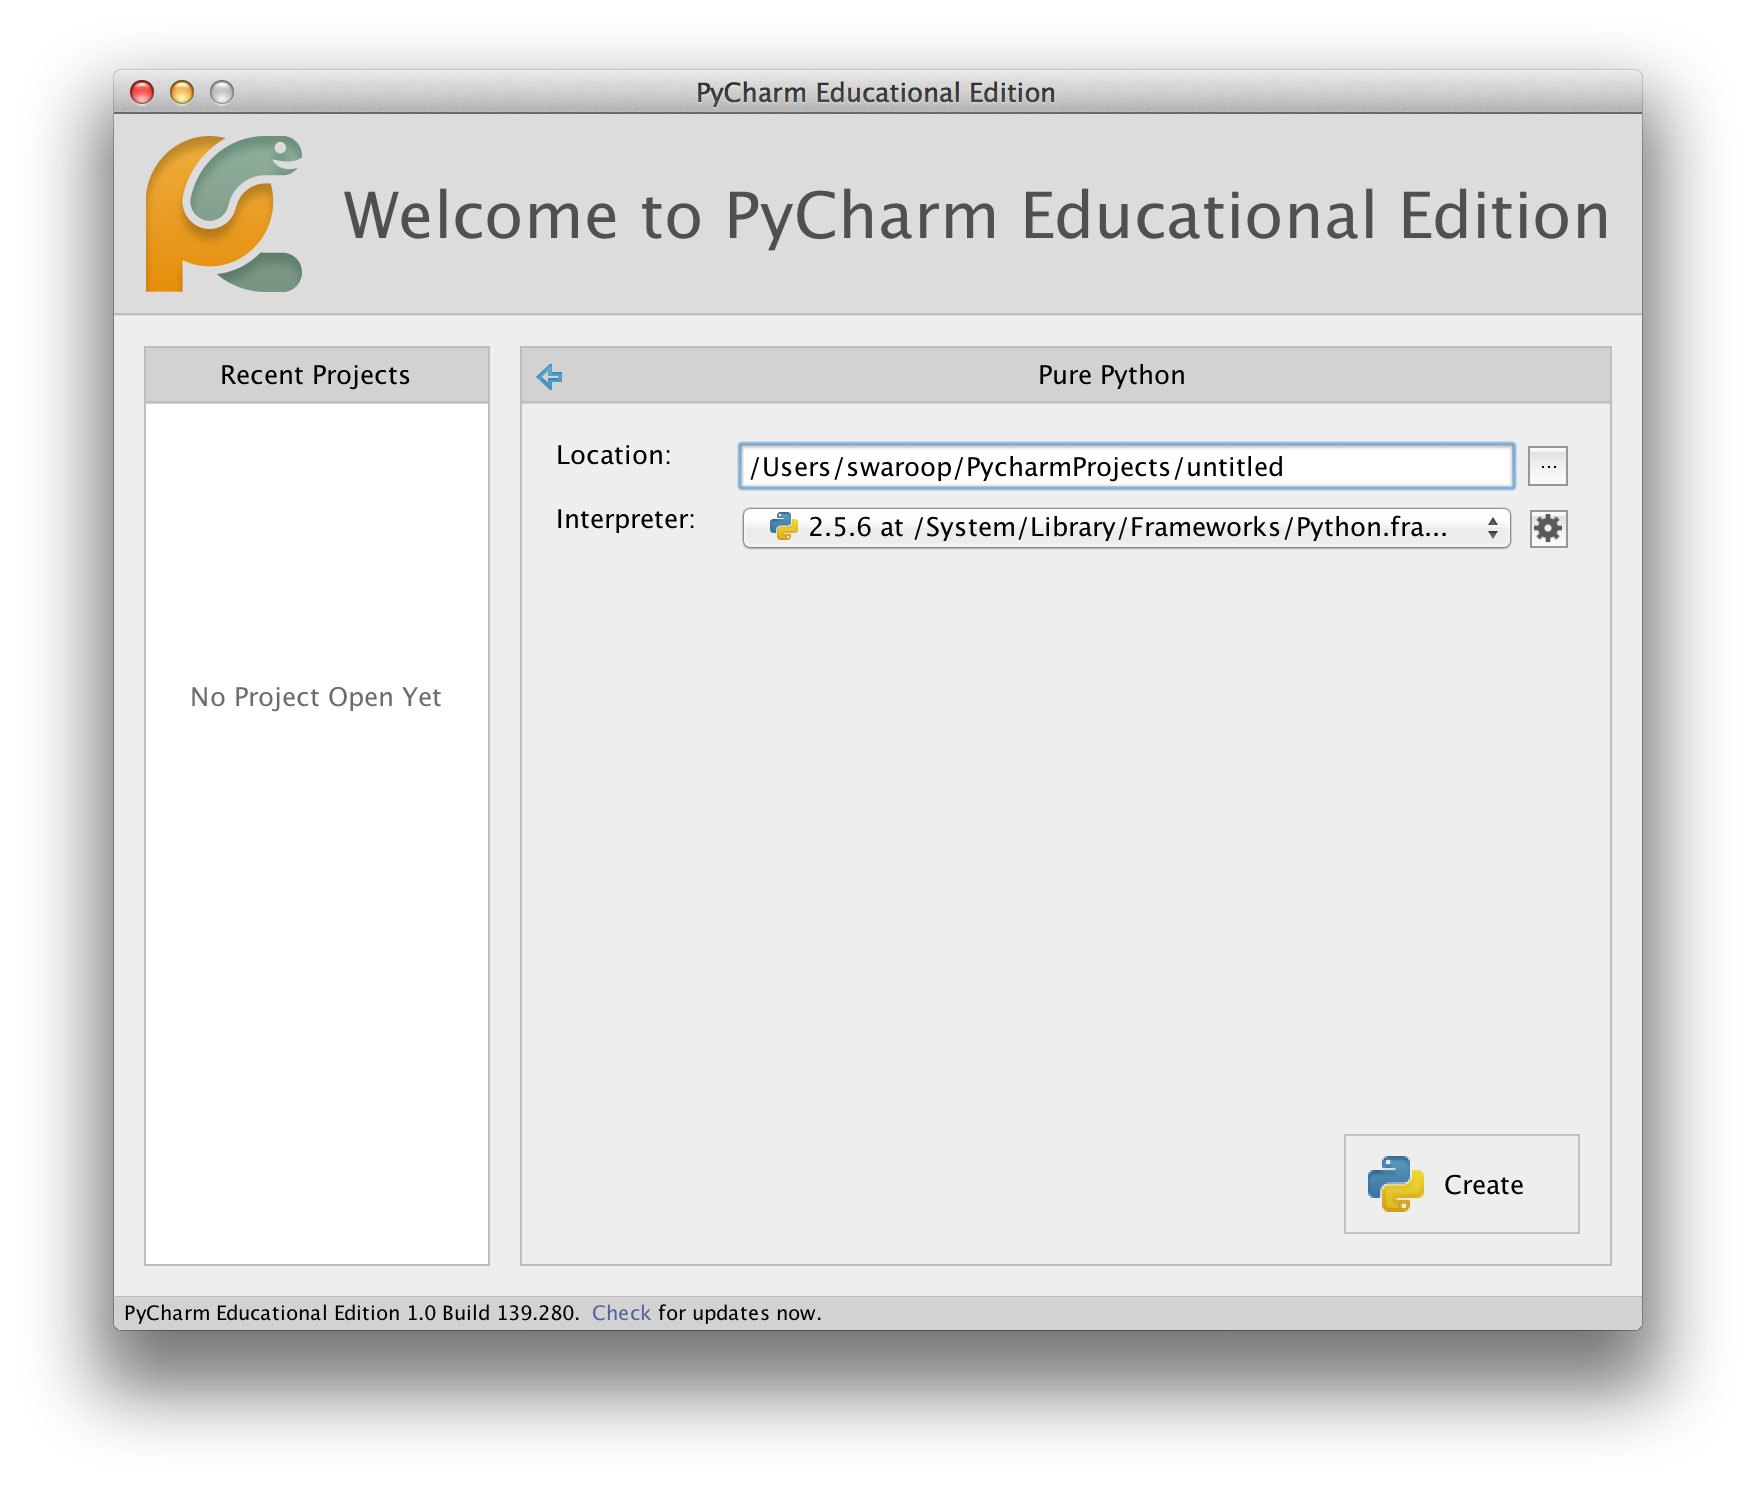 PyCharm project details